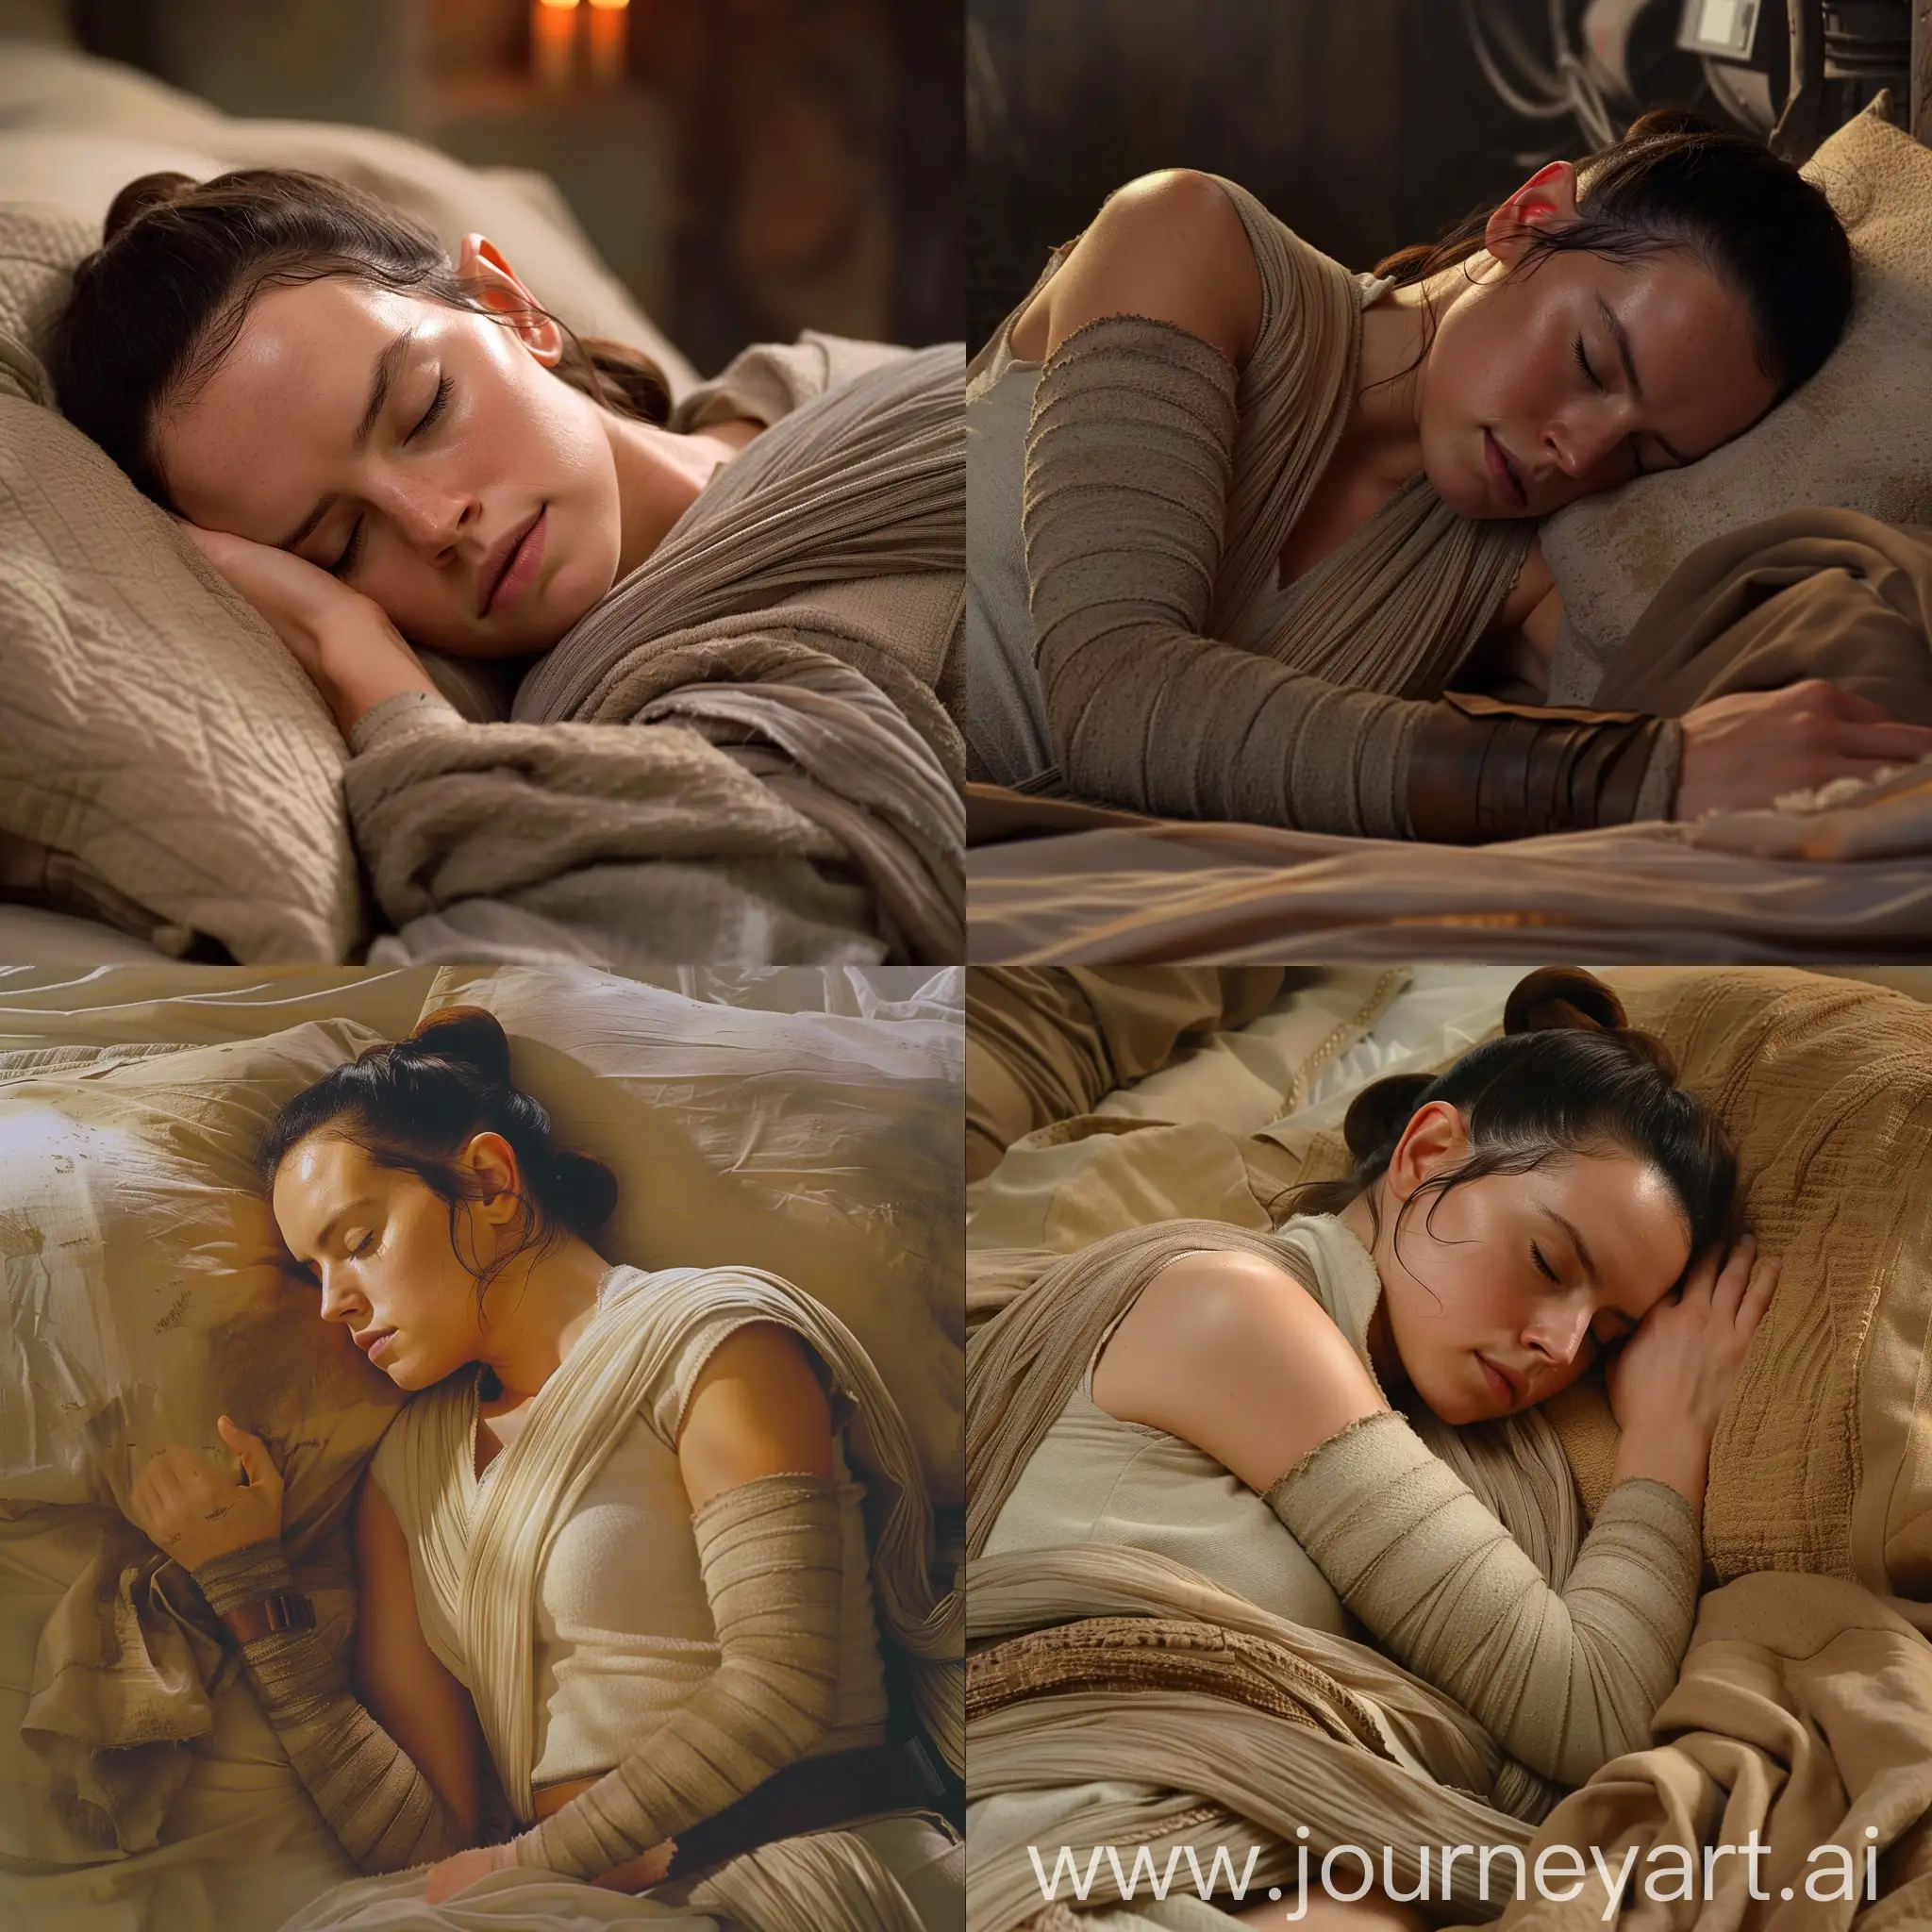 Rey from star wars movie sleeping in bed